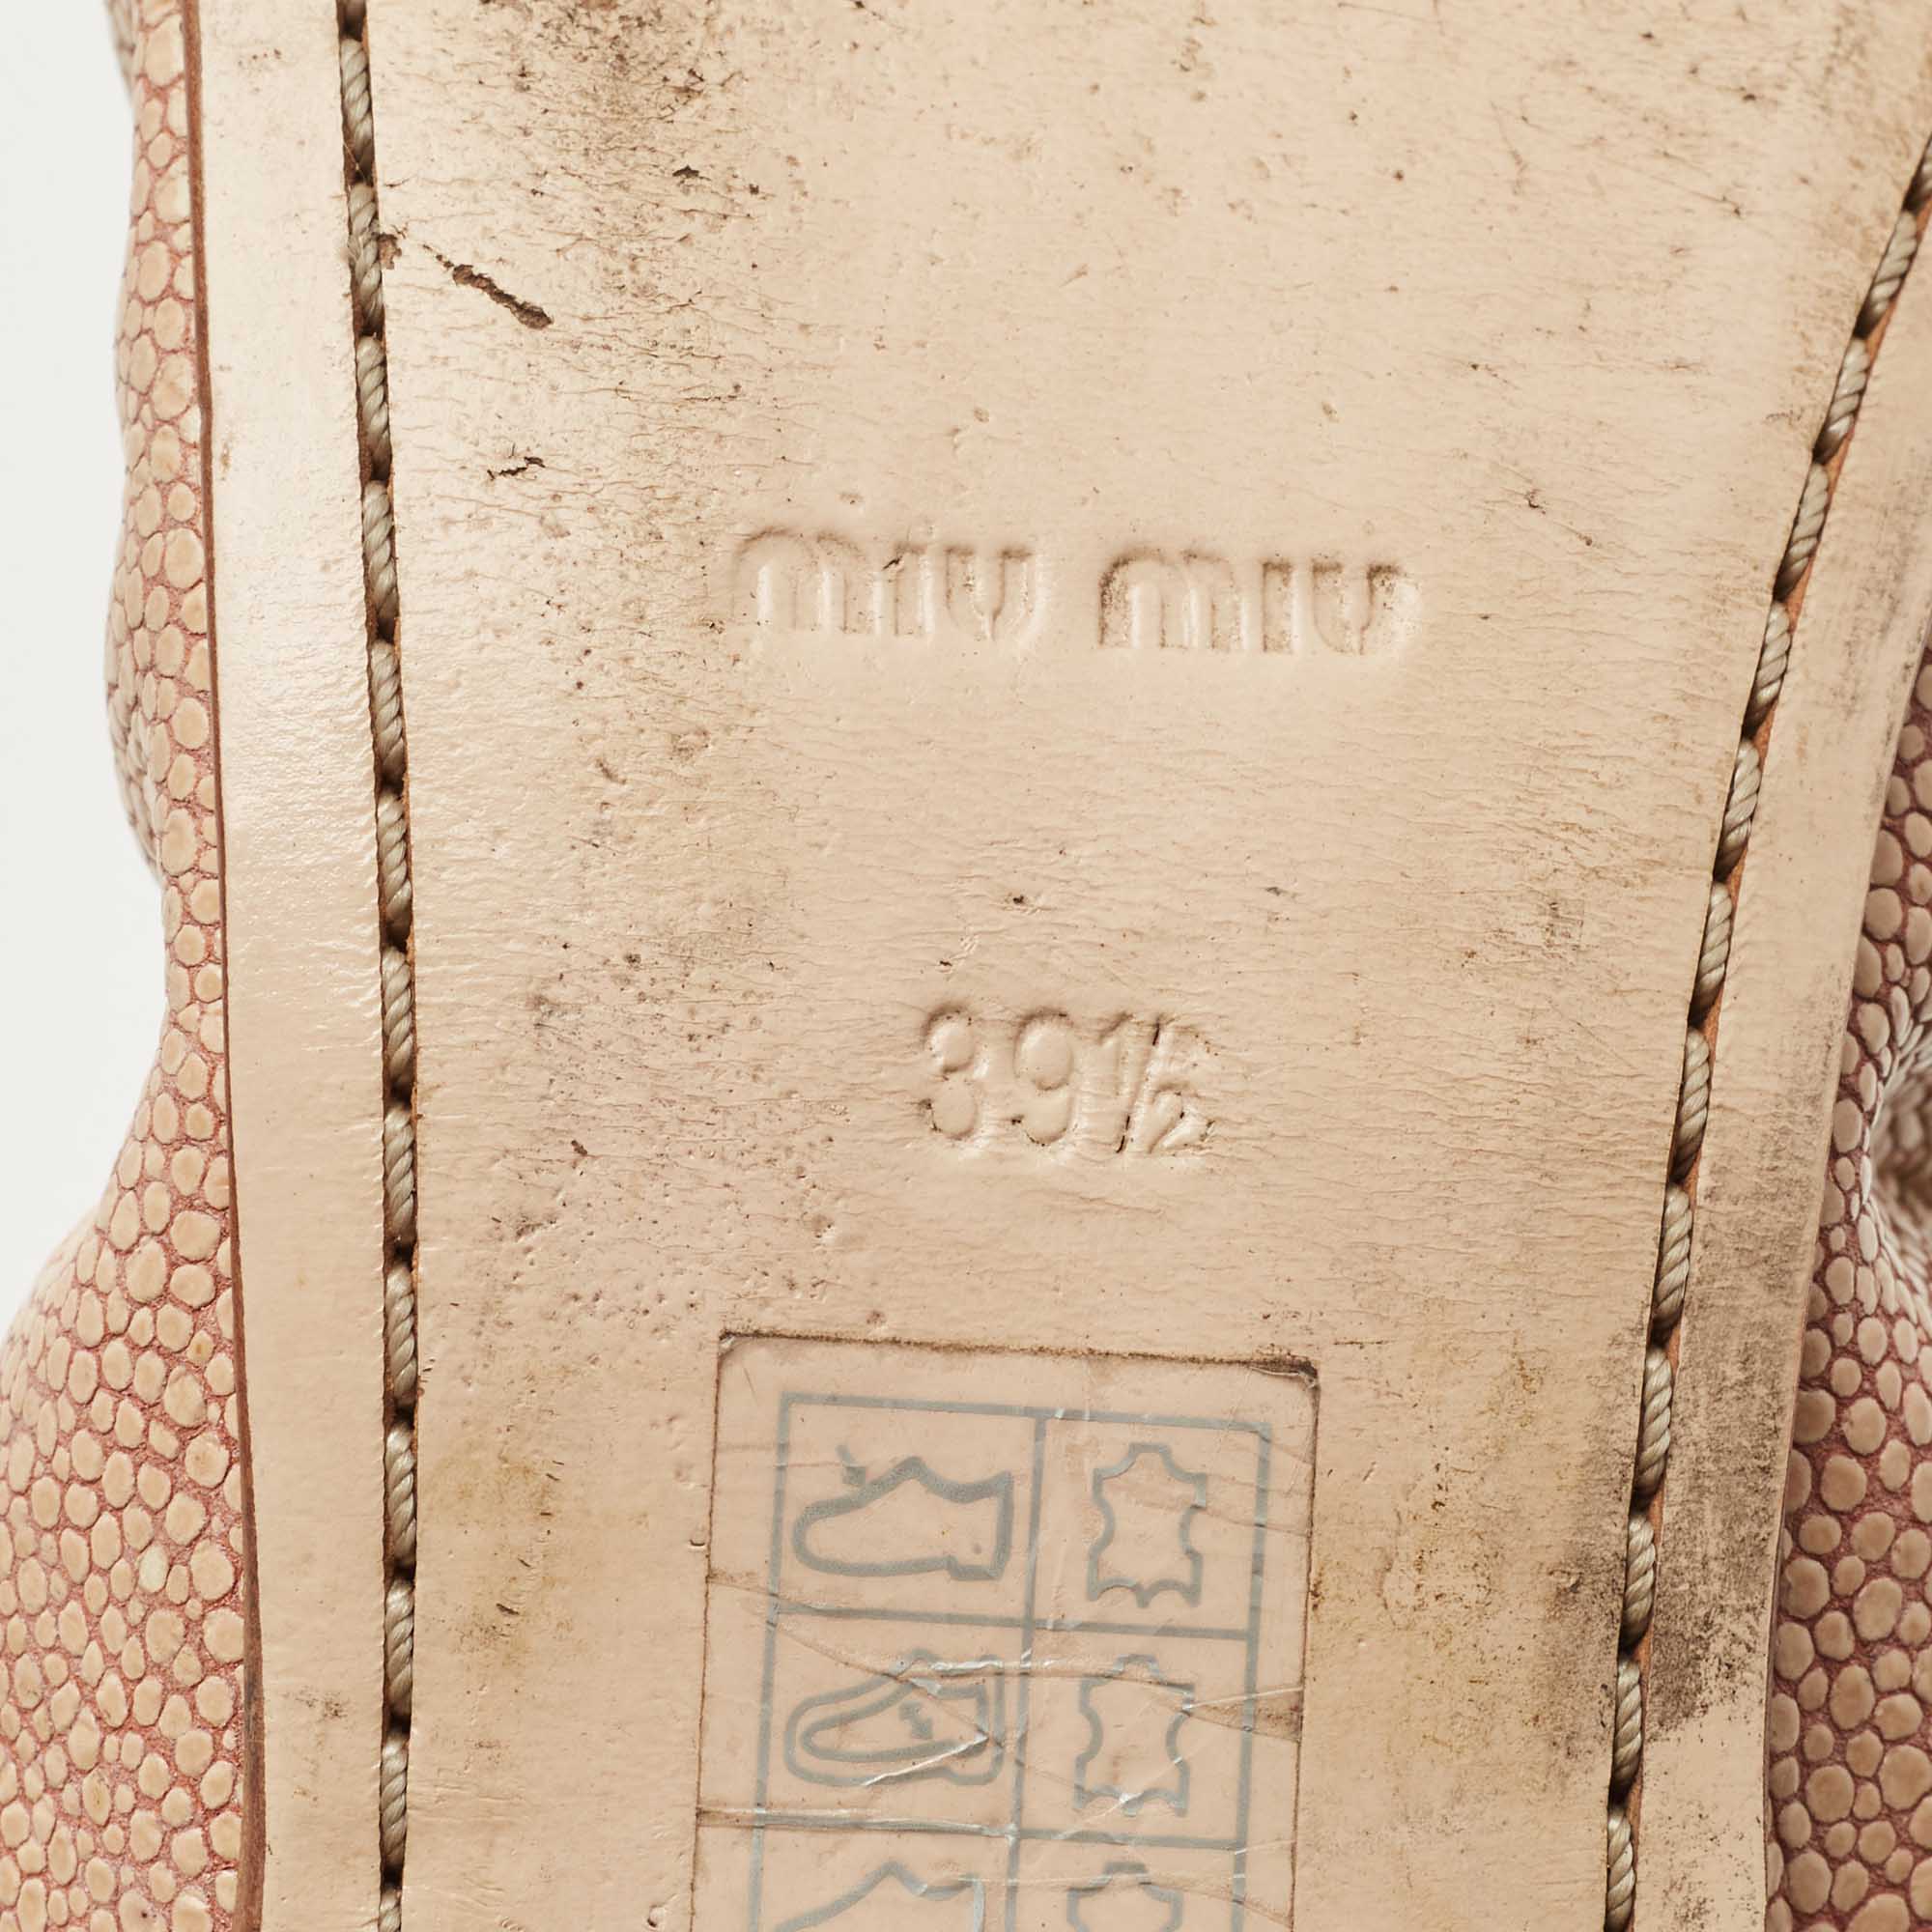 Miu Miu Beige Texture Leather Scrunch Bow Ballet Flats Size 39.5